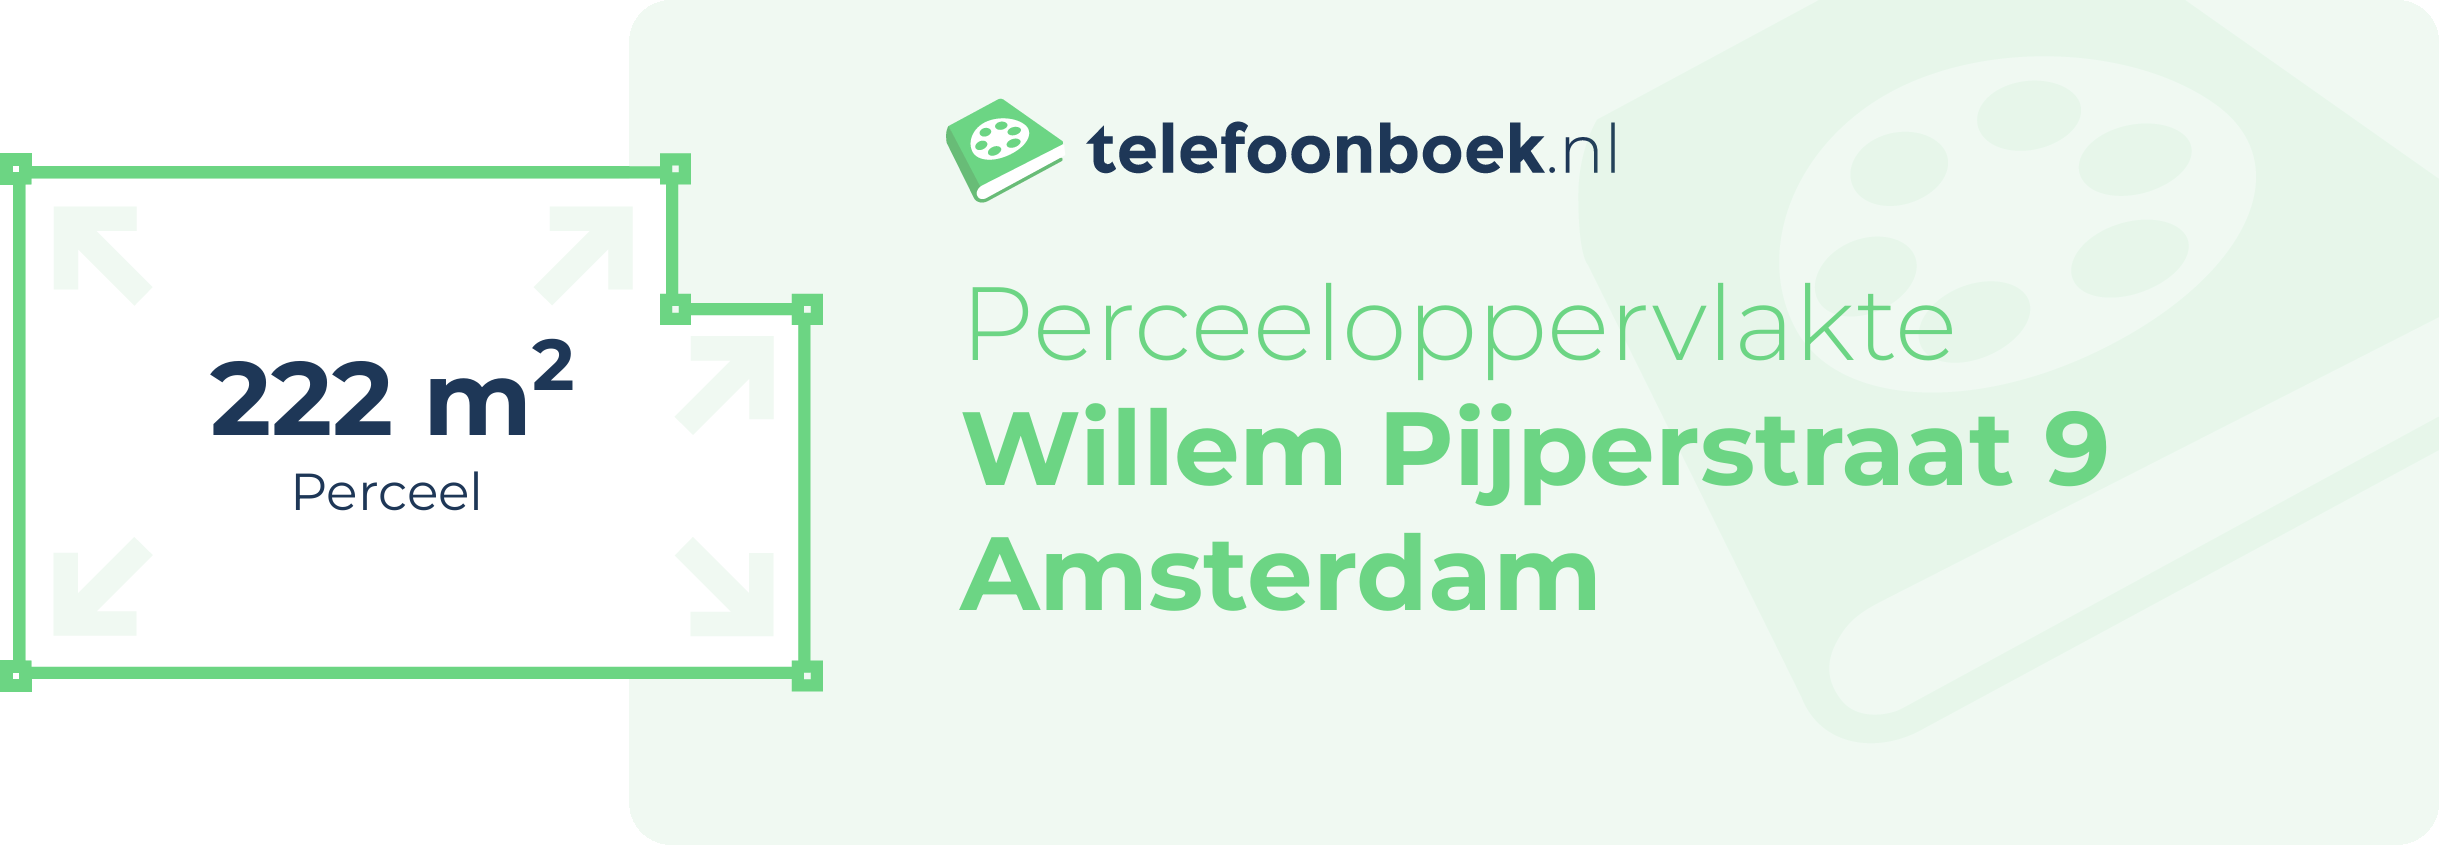 Perceeloppervlakte Willem Pijperstraat 9 Amsterdam